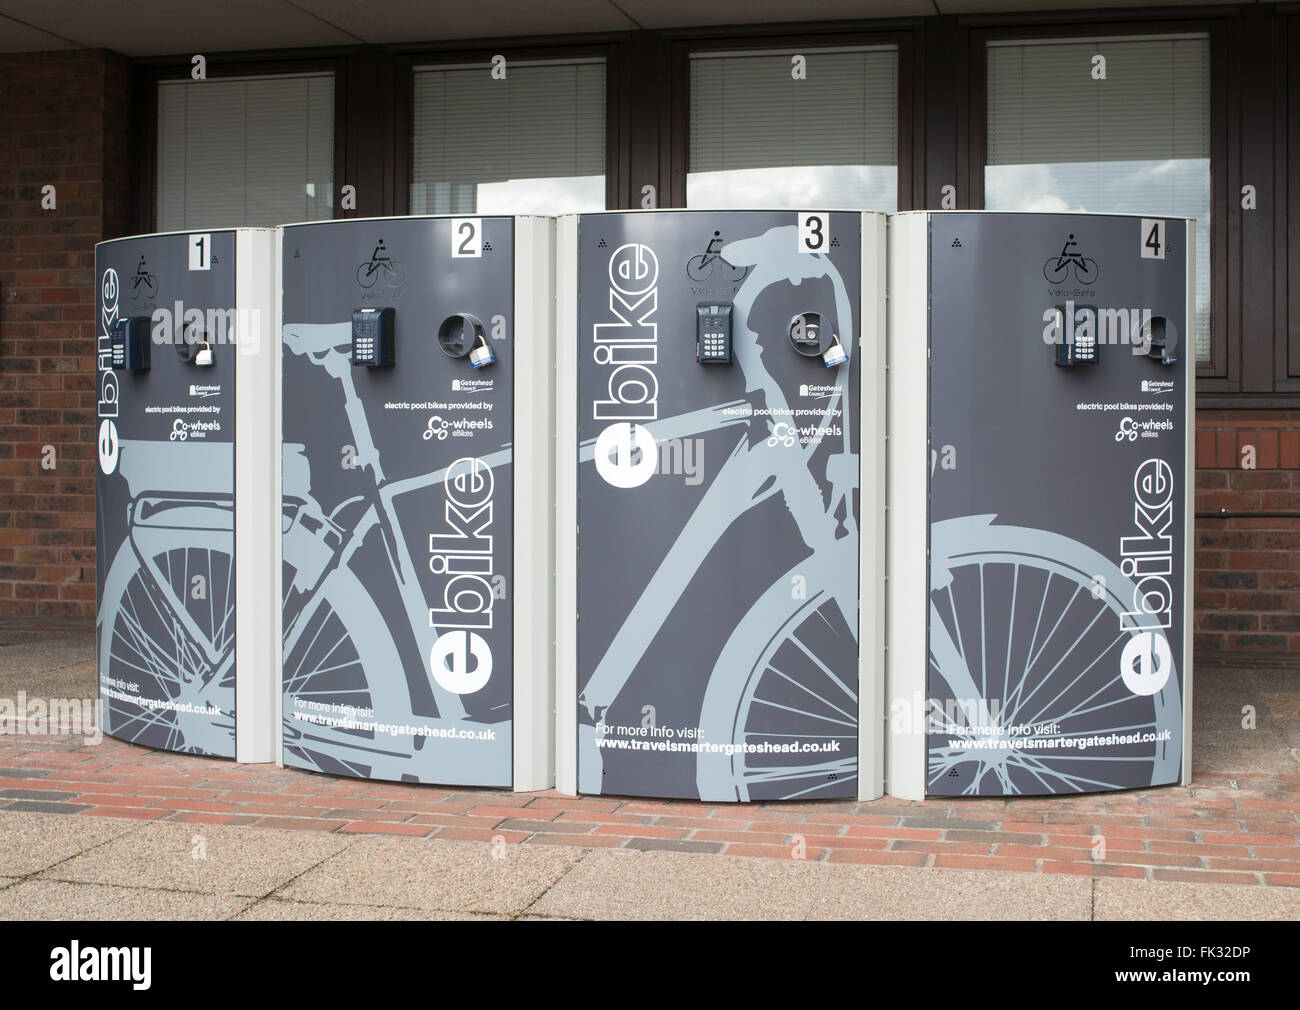 Co-wheels ebike electric hire bike lockers outside Gateshead Civic Centre, north east England, UK Stock Photo